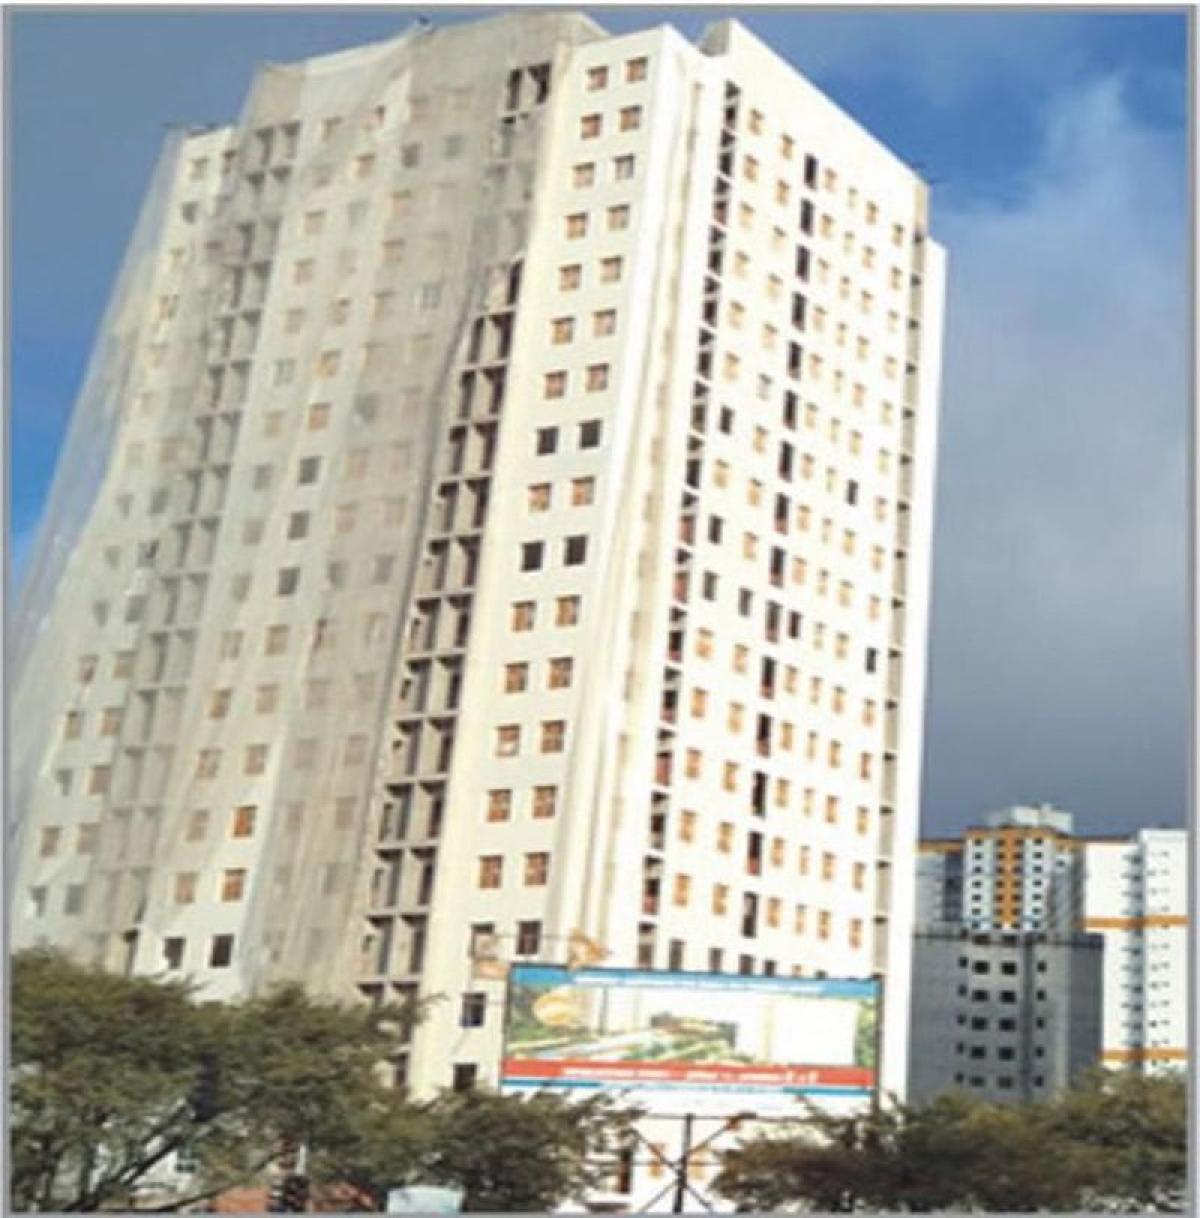 Picture of Commercial Building For Sale in Taboao Da Serra, Sao Paulo, Brazil